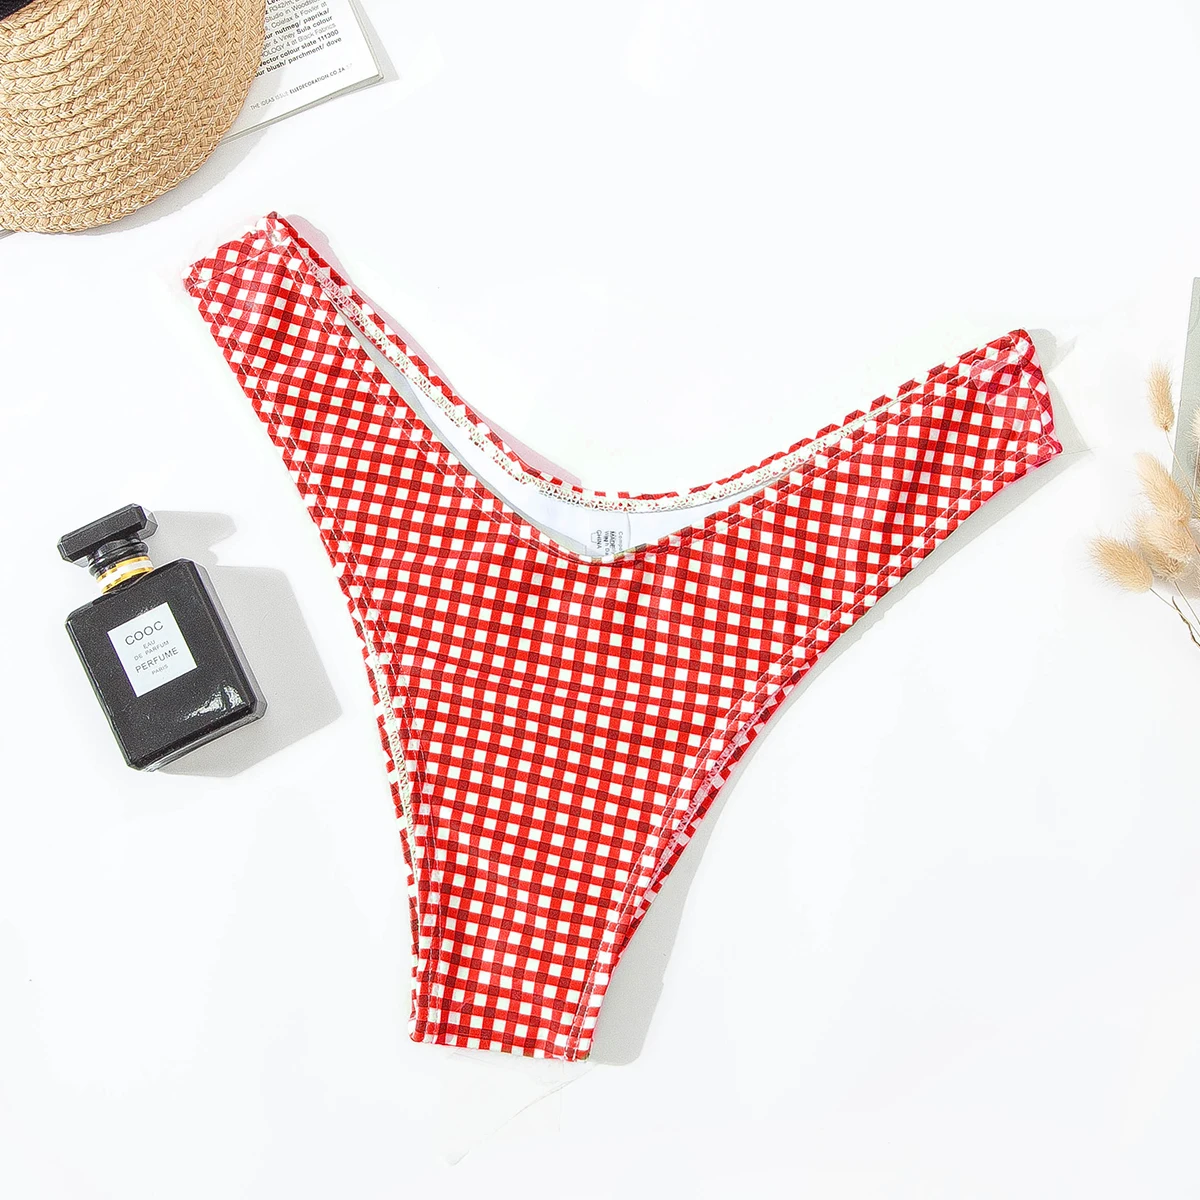 

swim CyxWzy Swimsuits Women 2022 Bikinis Fashion Swimwear Set With Shorts Summer Beach Suit Thick Red and White Check Printing